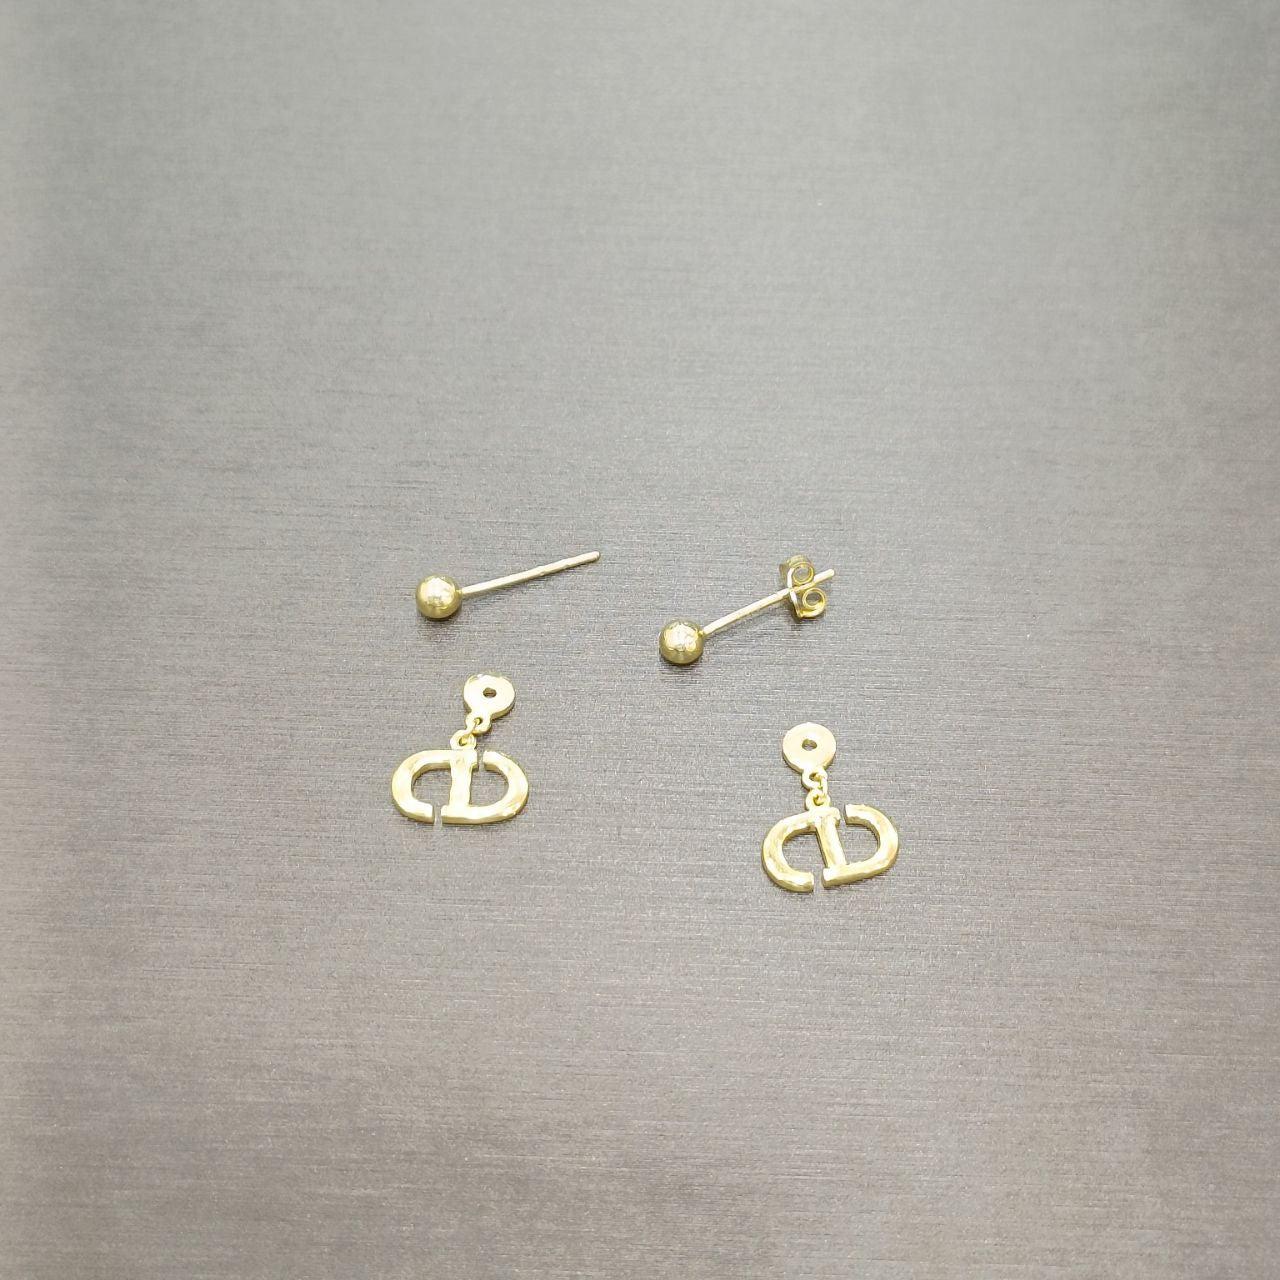 22k / 916 Gold D Design Earring 2 in 1-916 gold-Best Gold Shop